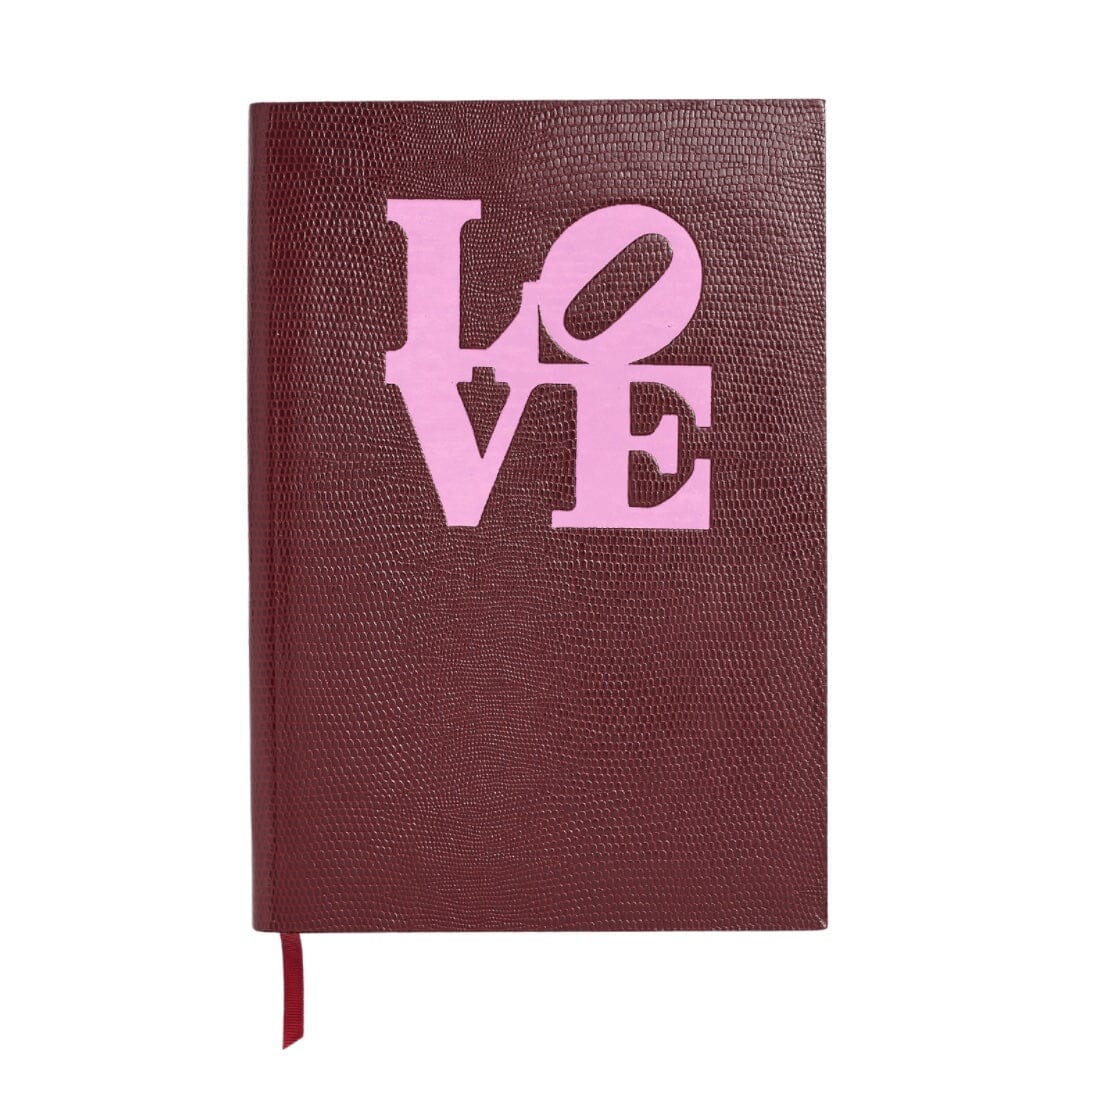 LOVE Journal Journals Sloane Stationery Burgundy 